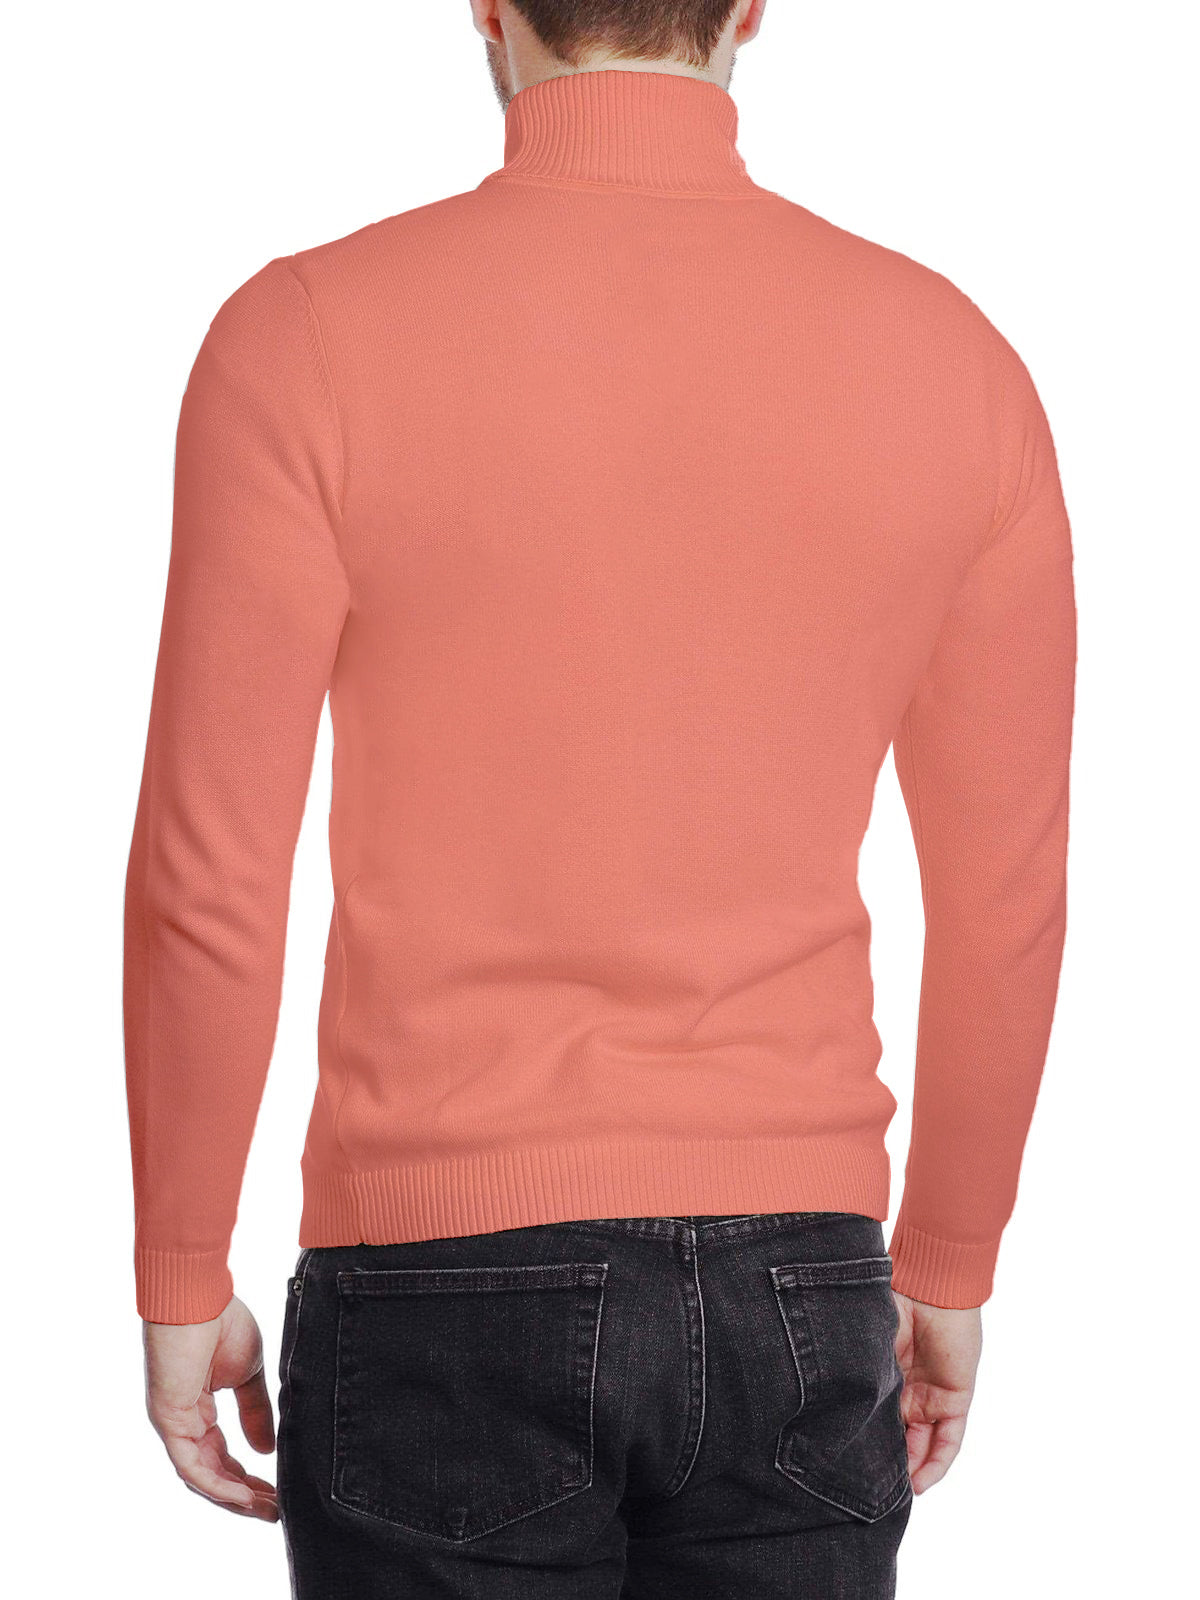 Arthur Black Men's Dusty Rose Pullover Cotton Blend Turtleneck Sweater Shirt